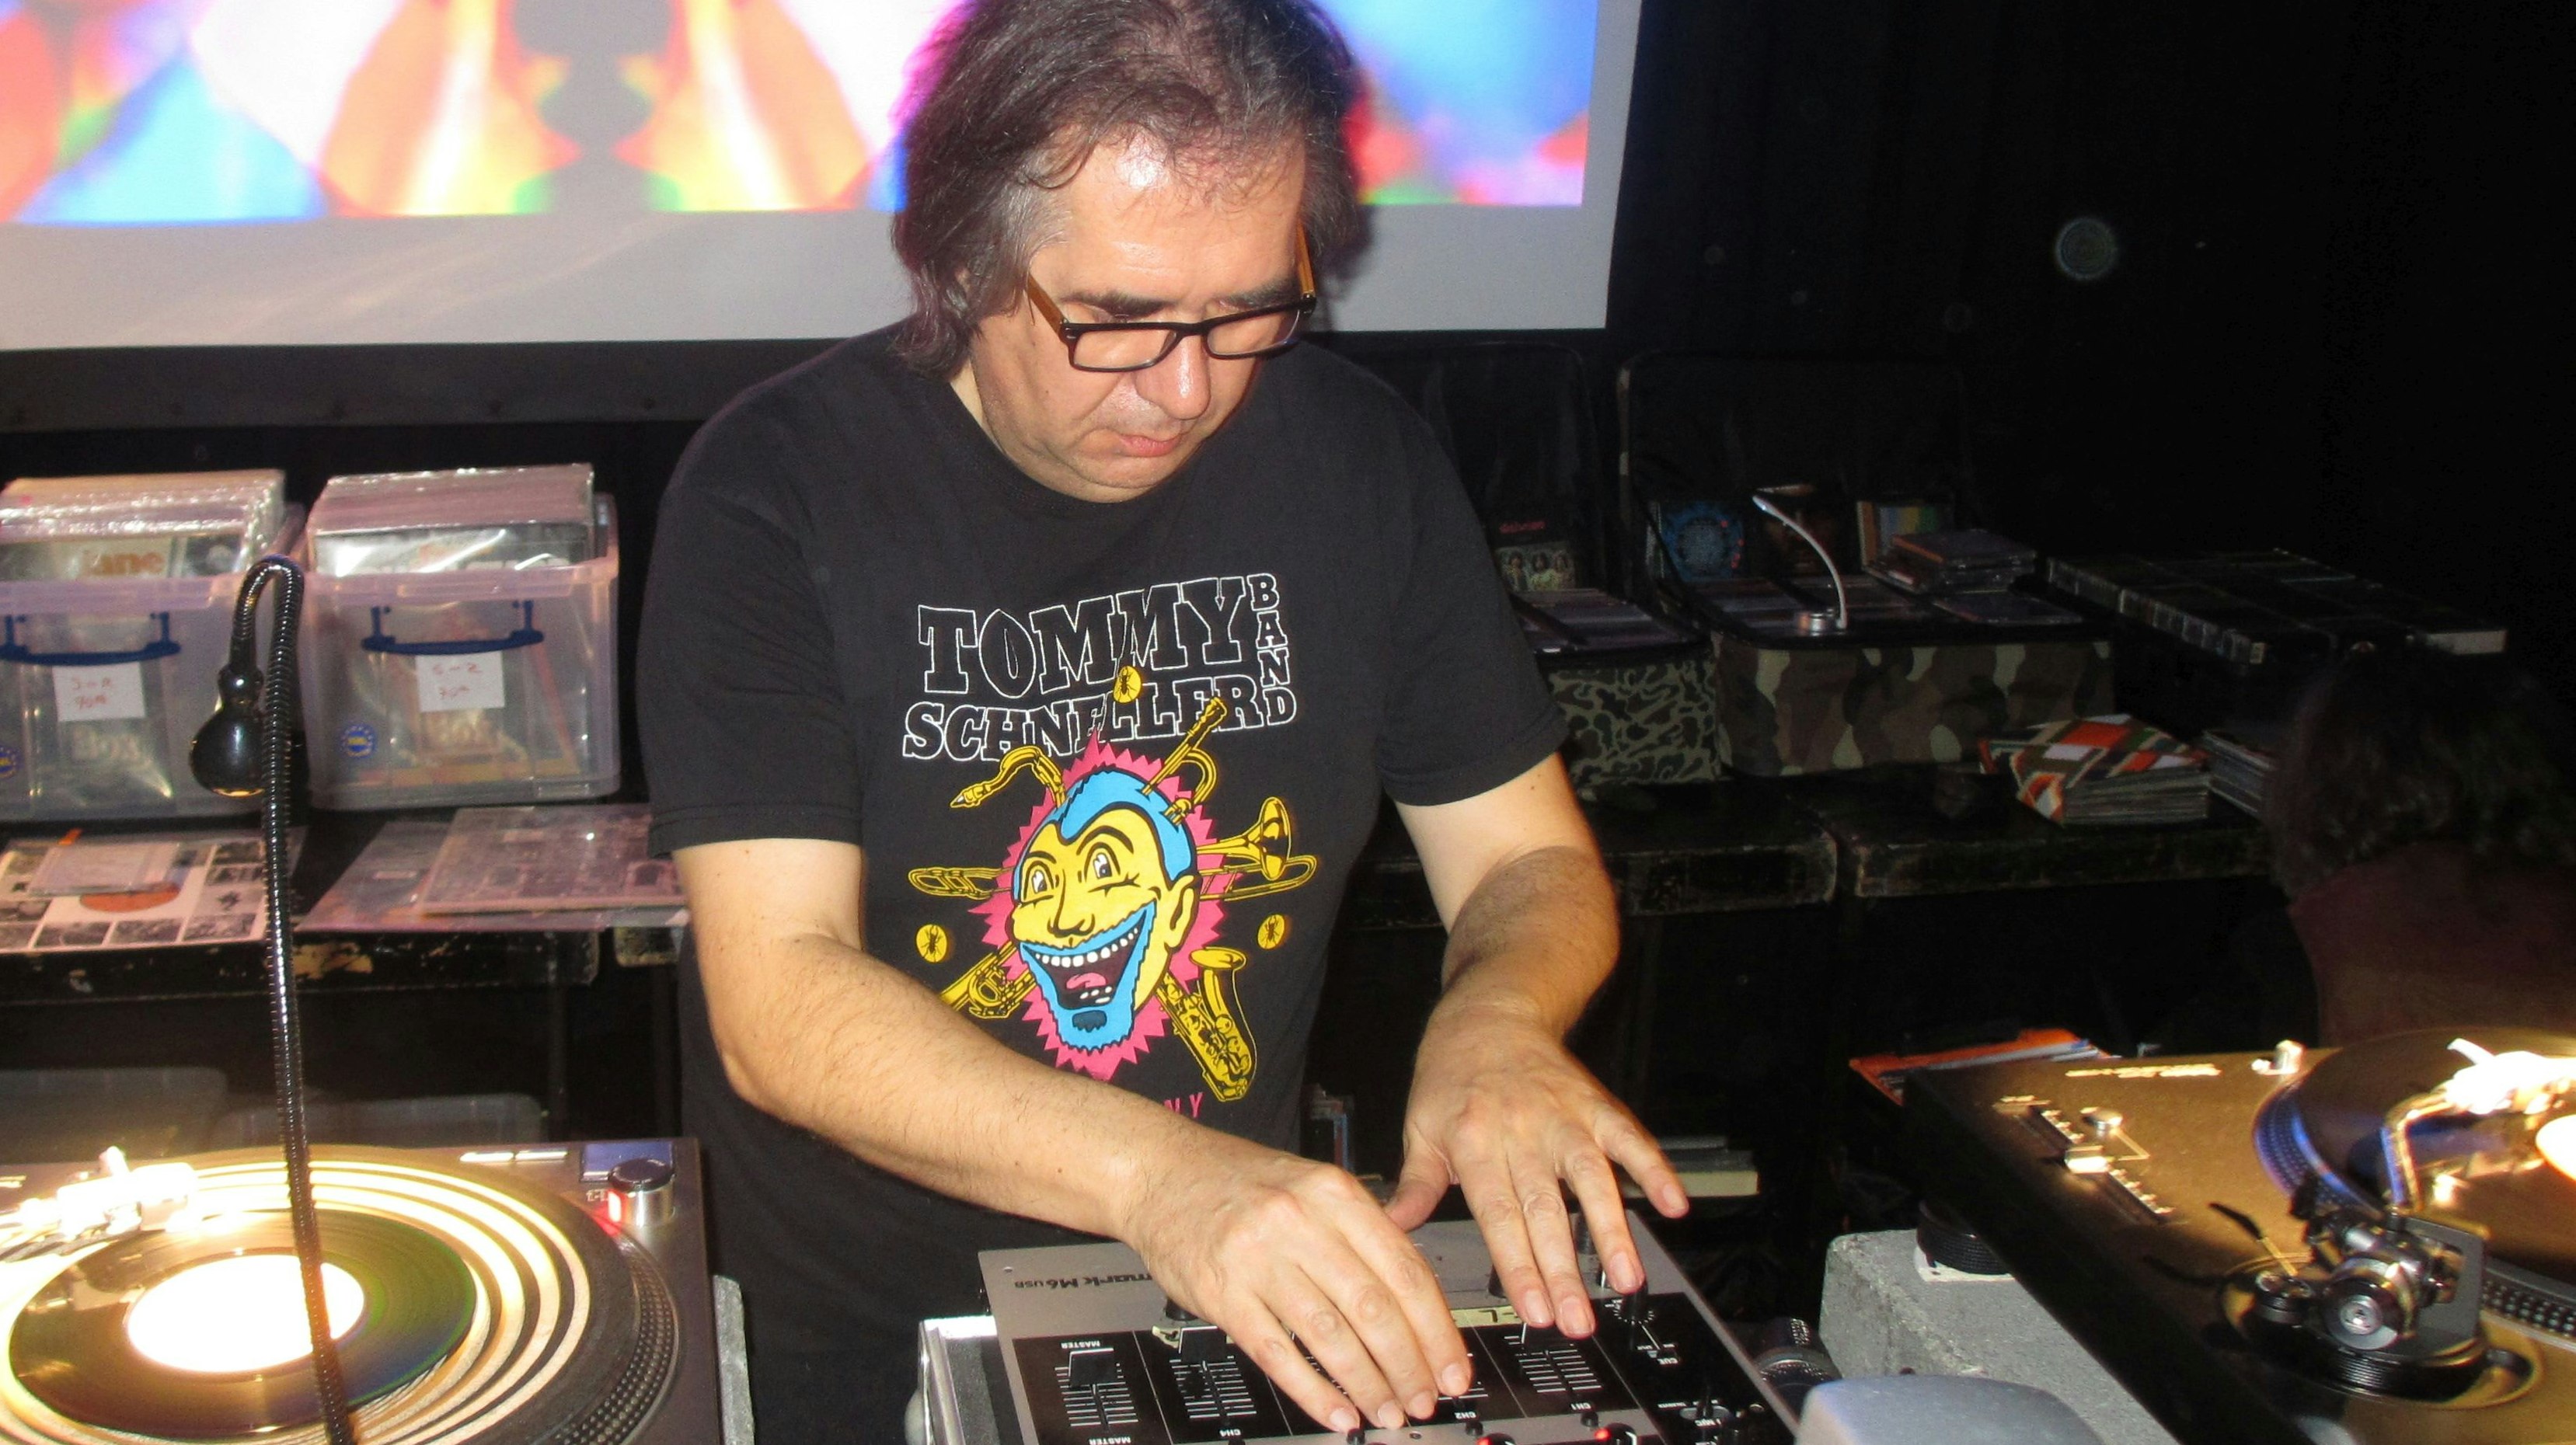 Plattenspieler statt MP3: Als Retro-DJ ist Gisbert Wegener voll in seinem Element. Foto: privat